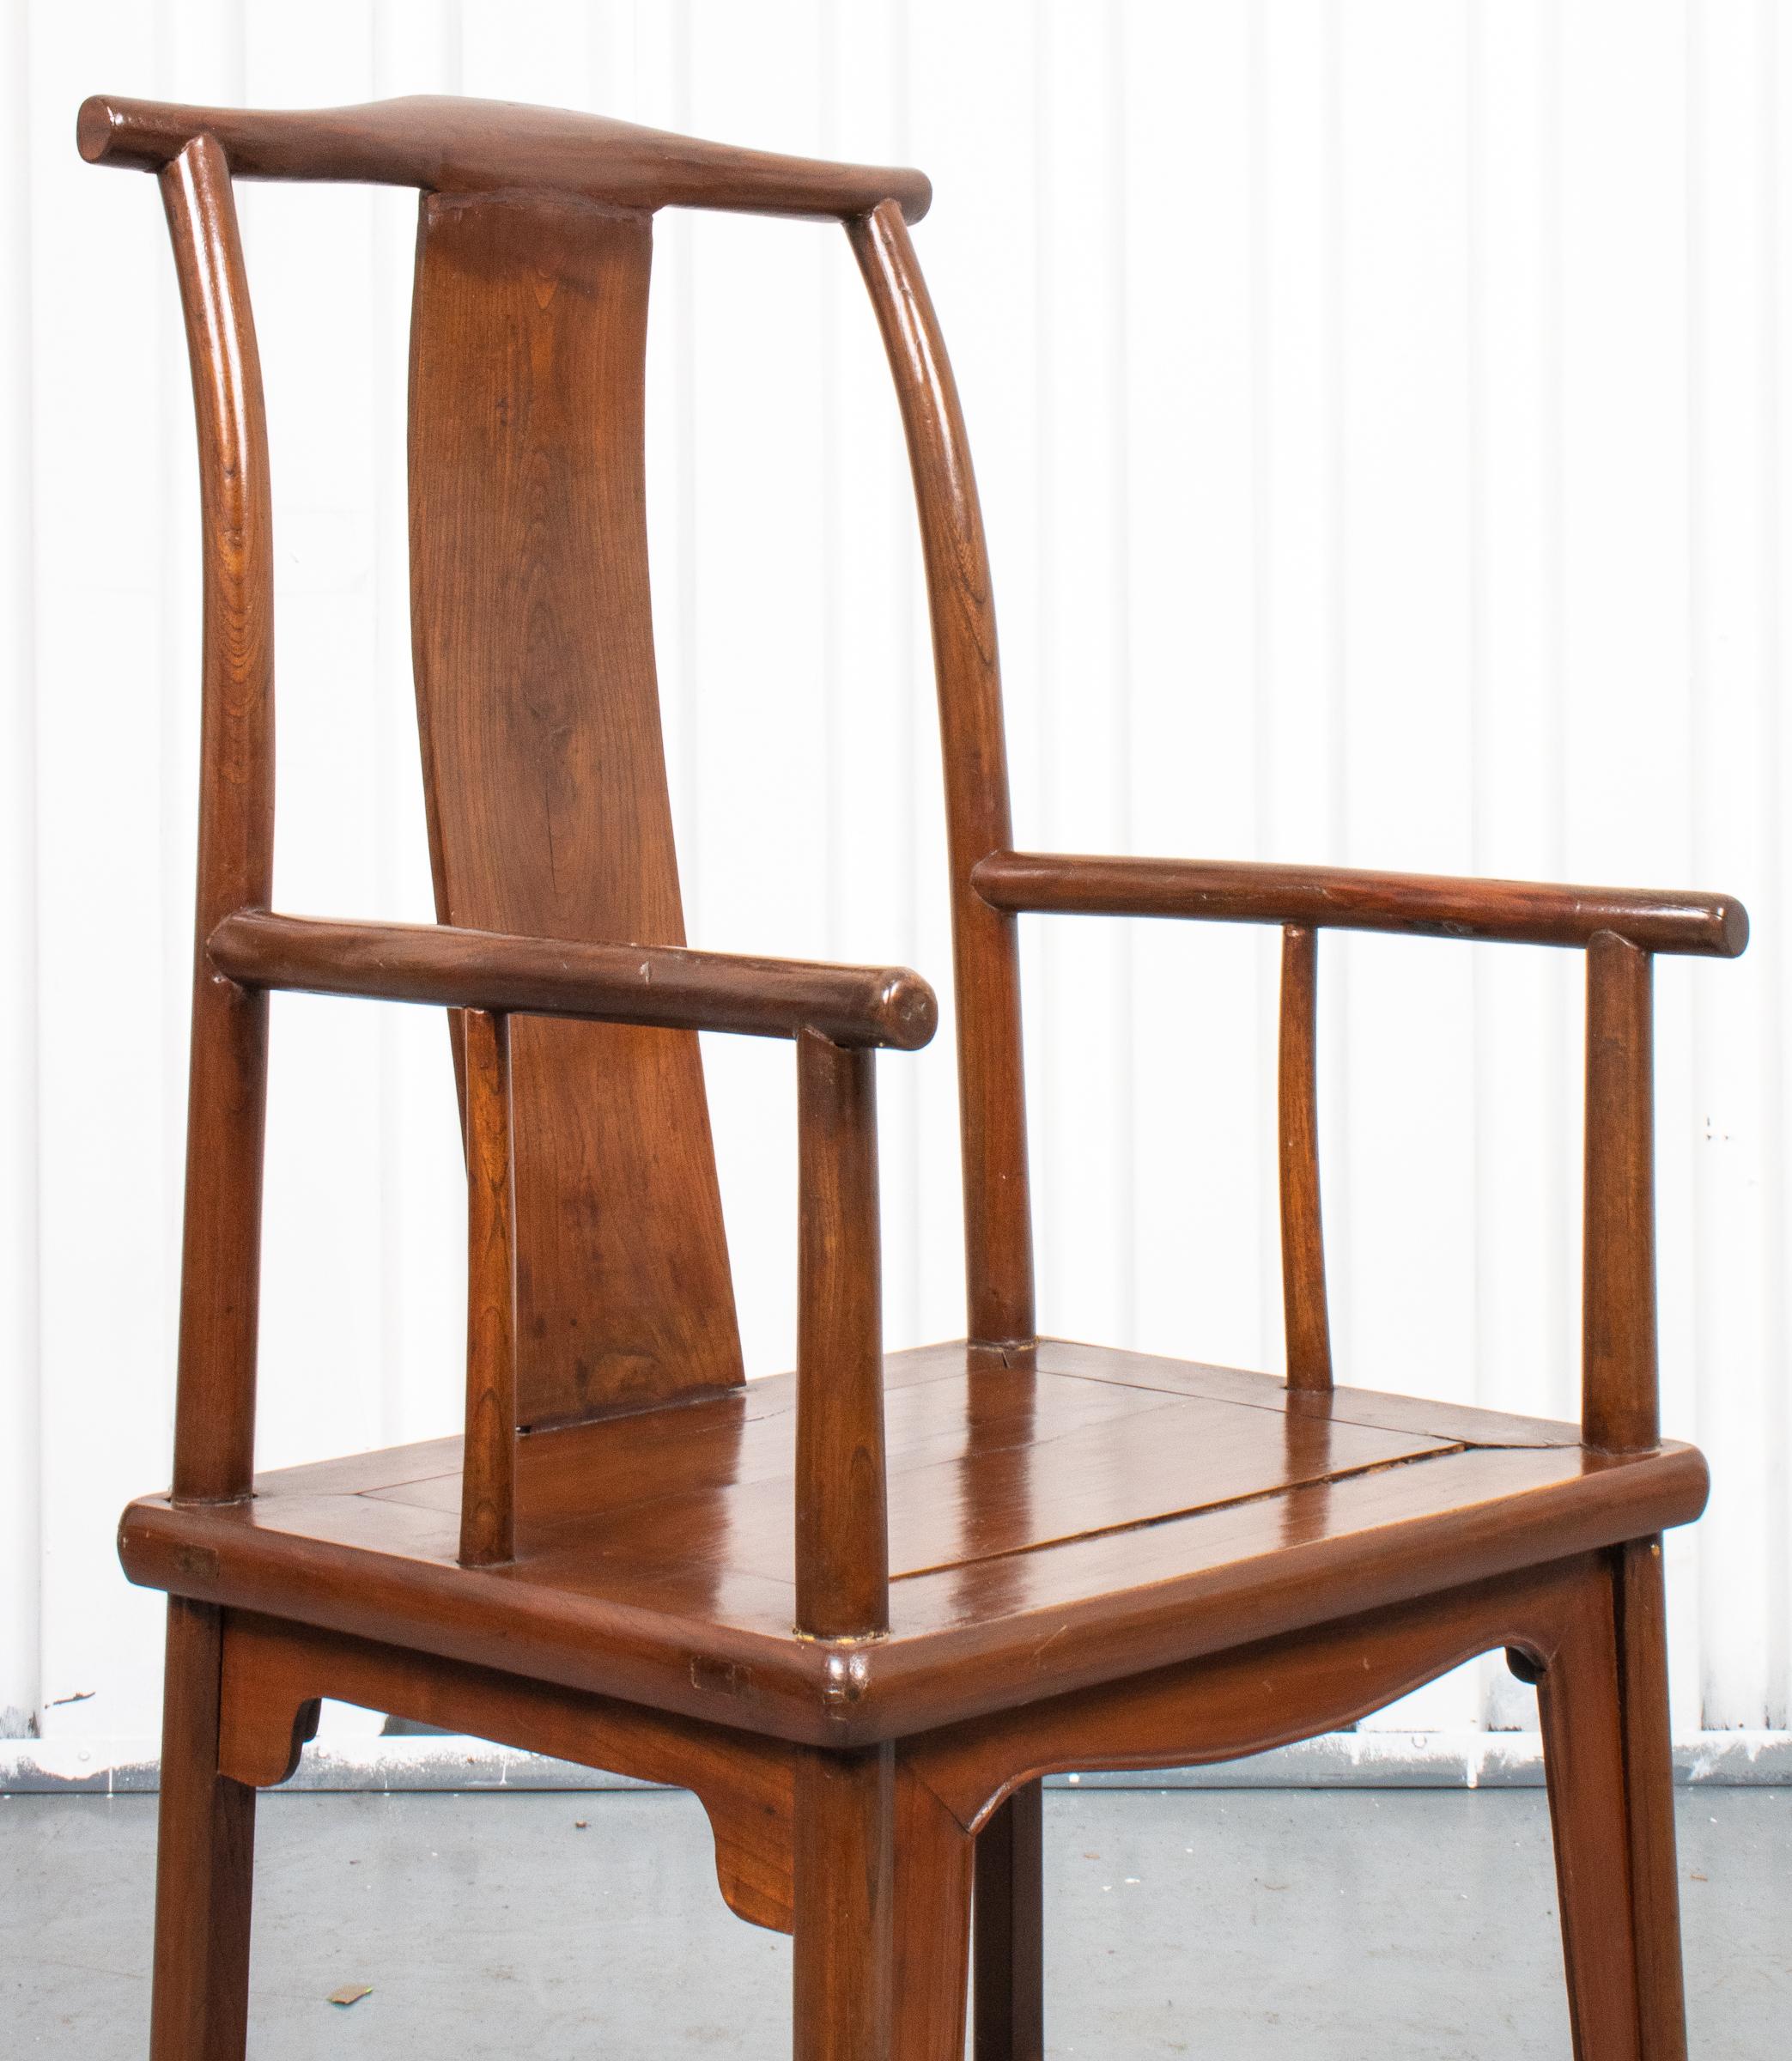 Chinese Hardwood Yoke Back Scholar's Chairs 1